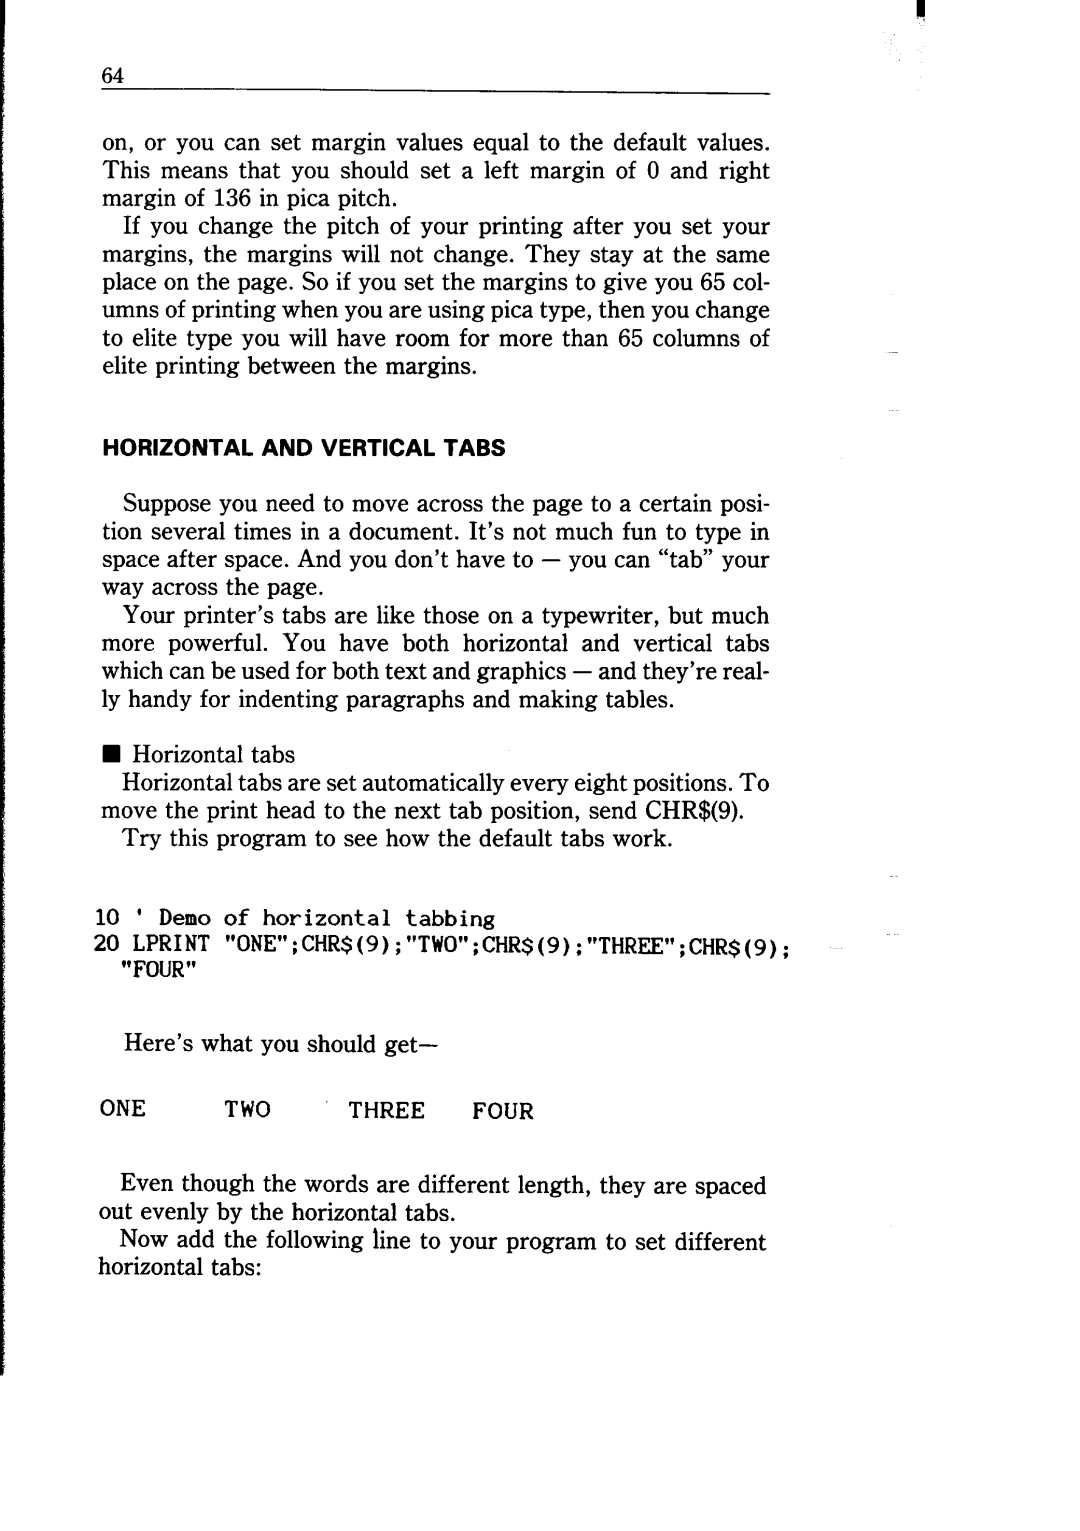 Star Micronics NB-15 user manual Horizontal And Vertical Tabs 